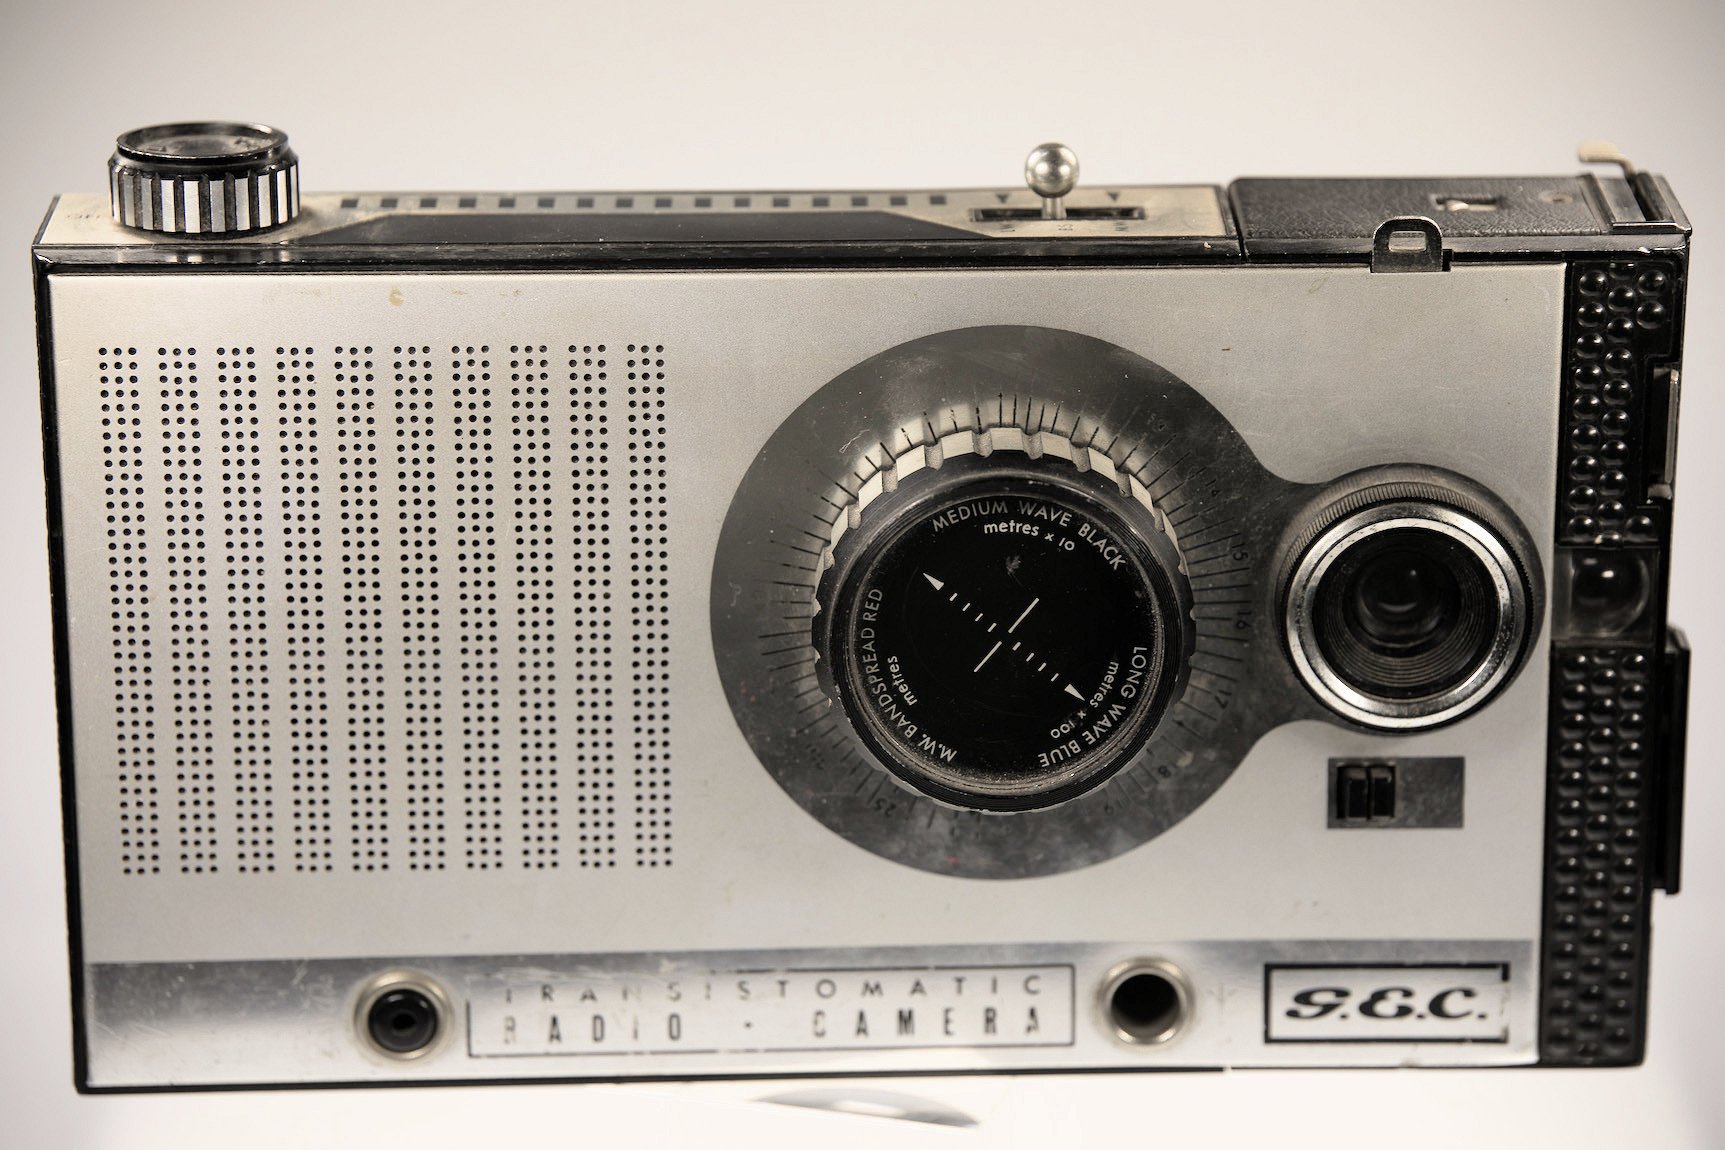 Kombination Kamera/Kofferradio Kodak - GEC Genelex Transistomatic 822 (Freilichtmuseum Roscheider Hof CC0)